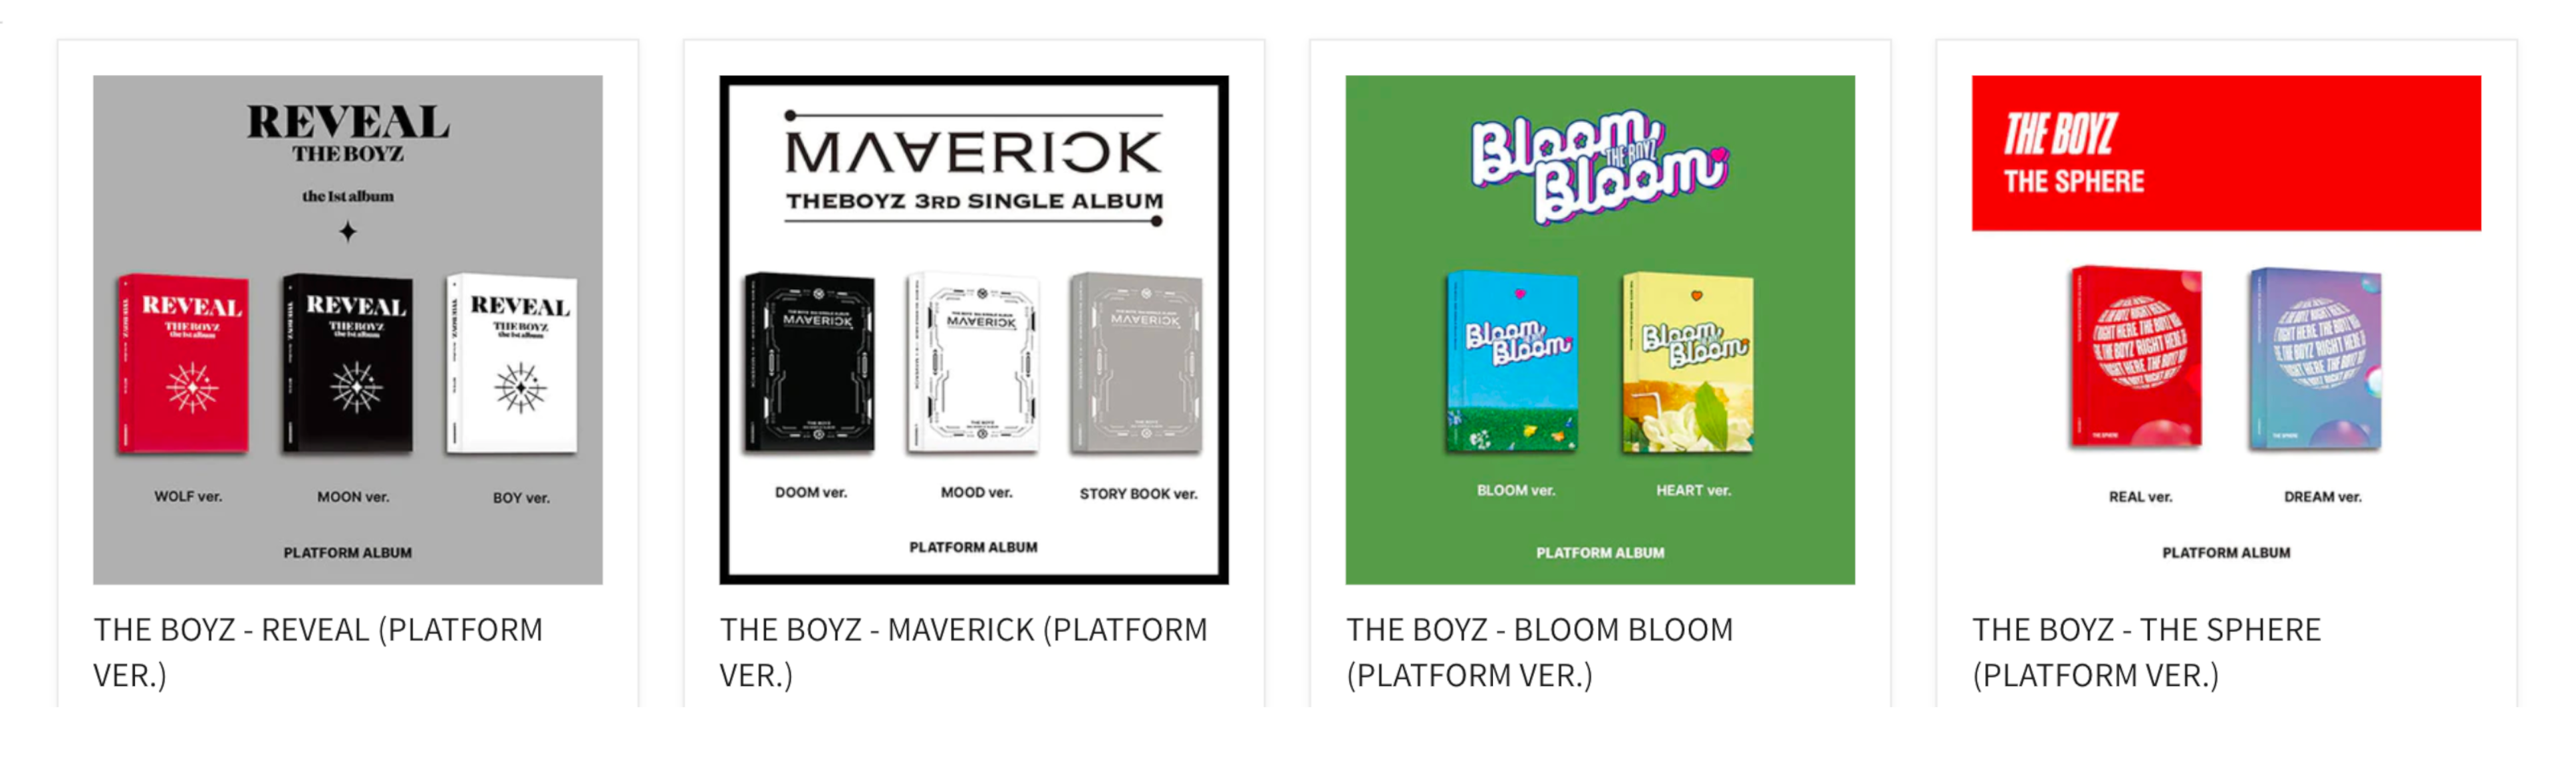 Nolae K-Pop Online Shop Pre-Order: The Boyz Platform Versions